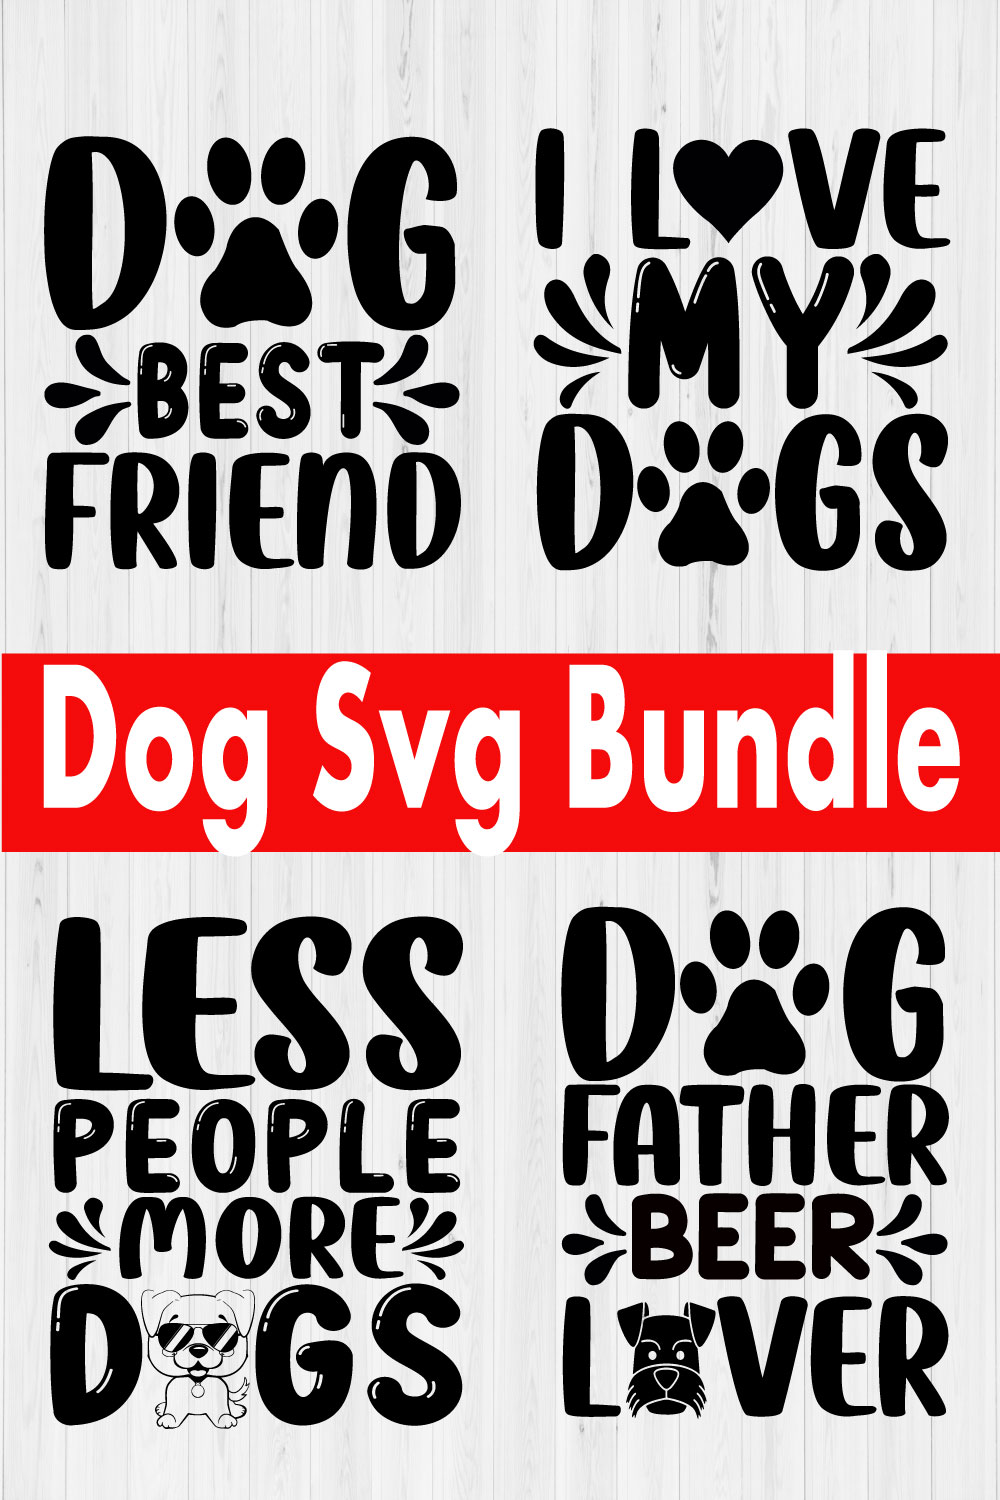 Dog Lovers Quotes Bundle Vol21 pinterest preview image.